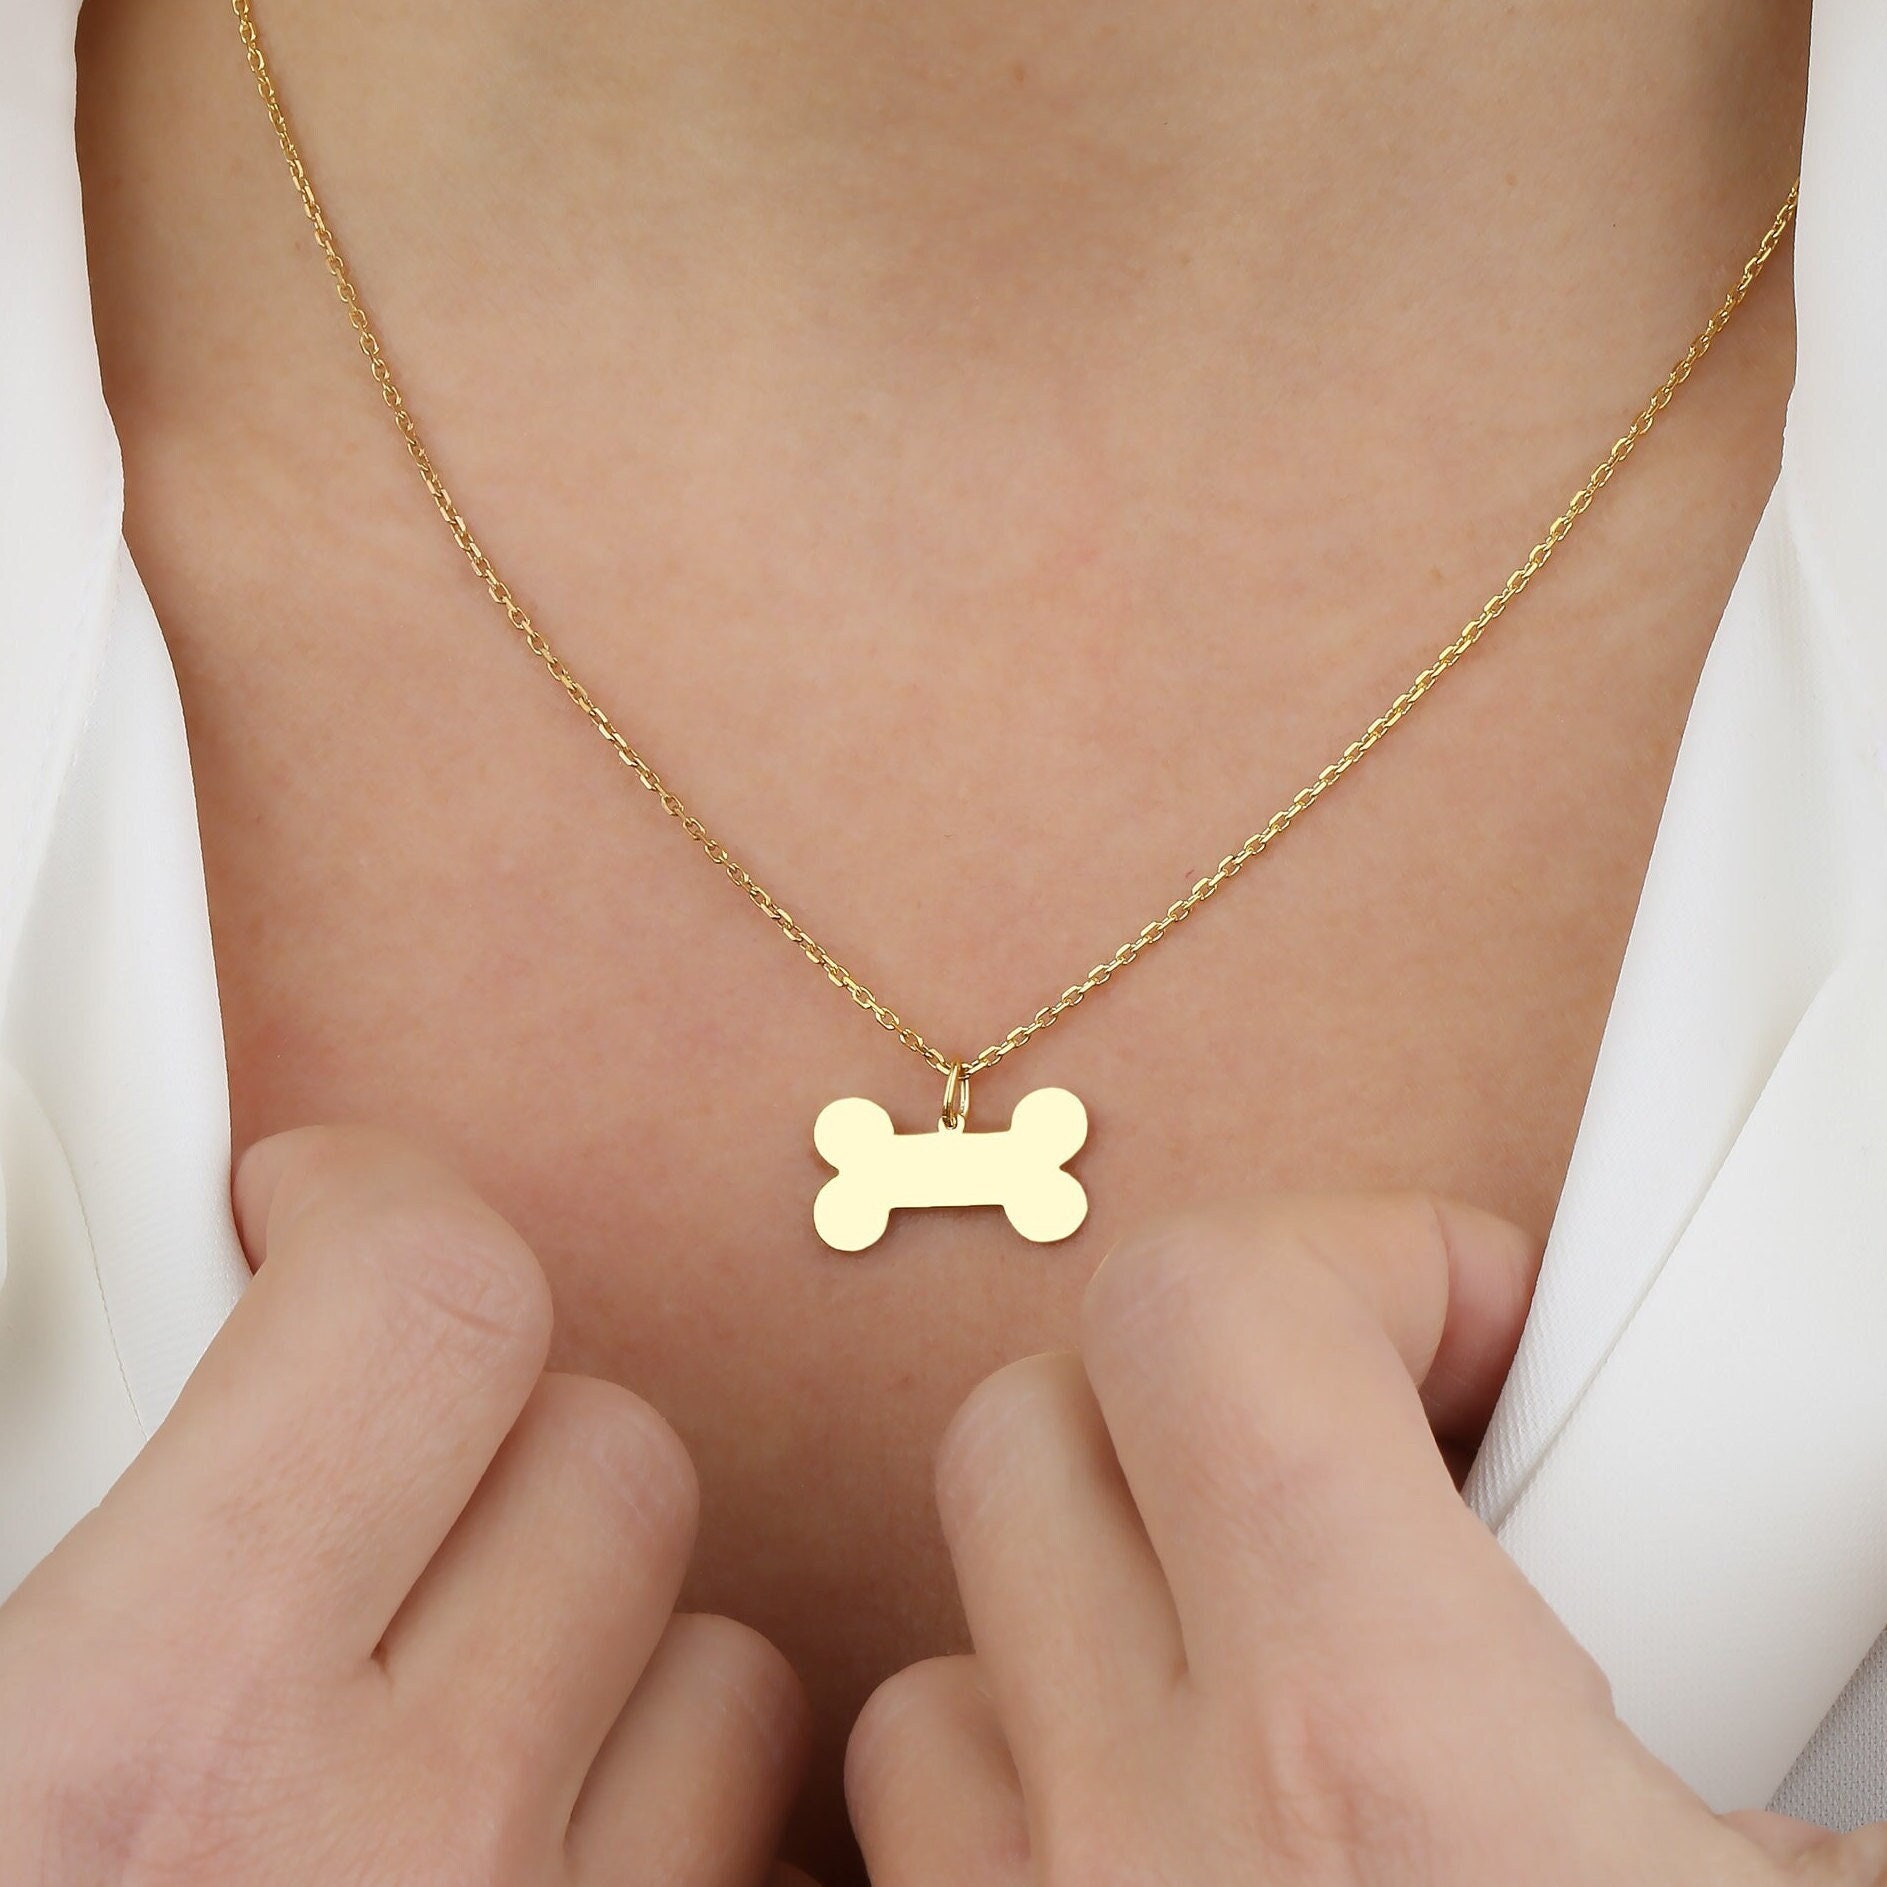 jewelry for women Bone Necklace Long Pendant Dog Bone Jewelry Sweater Chain  Accessories Sweater Chain Necklace Accessories - Walmart.com